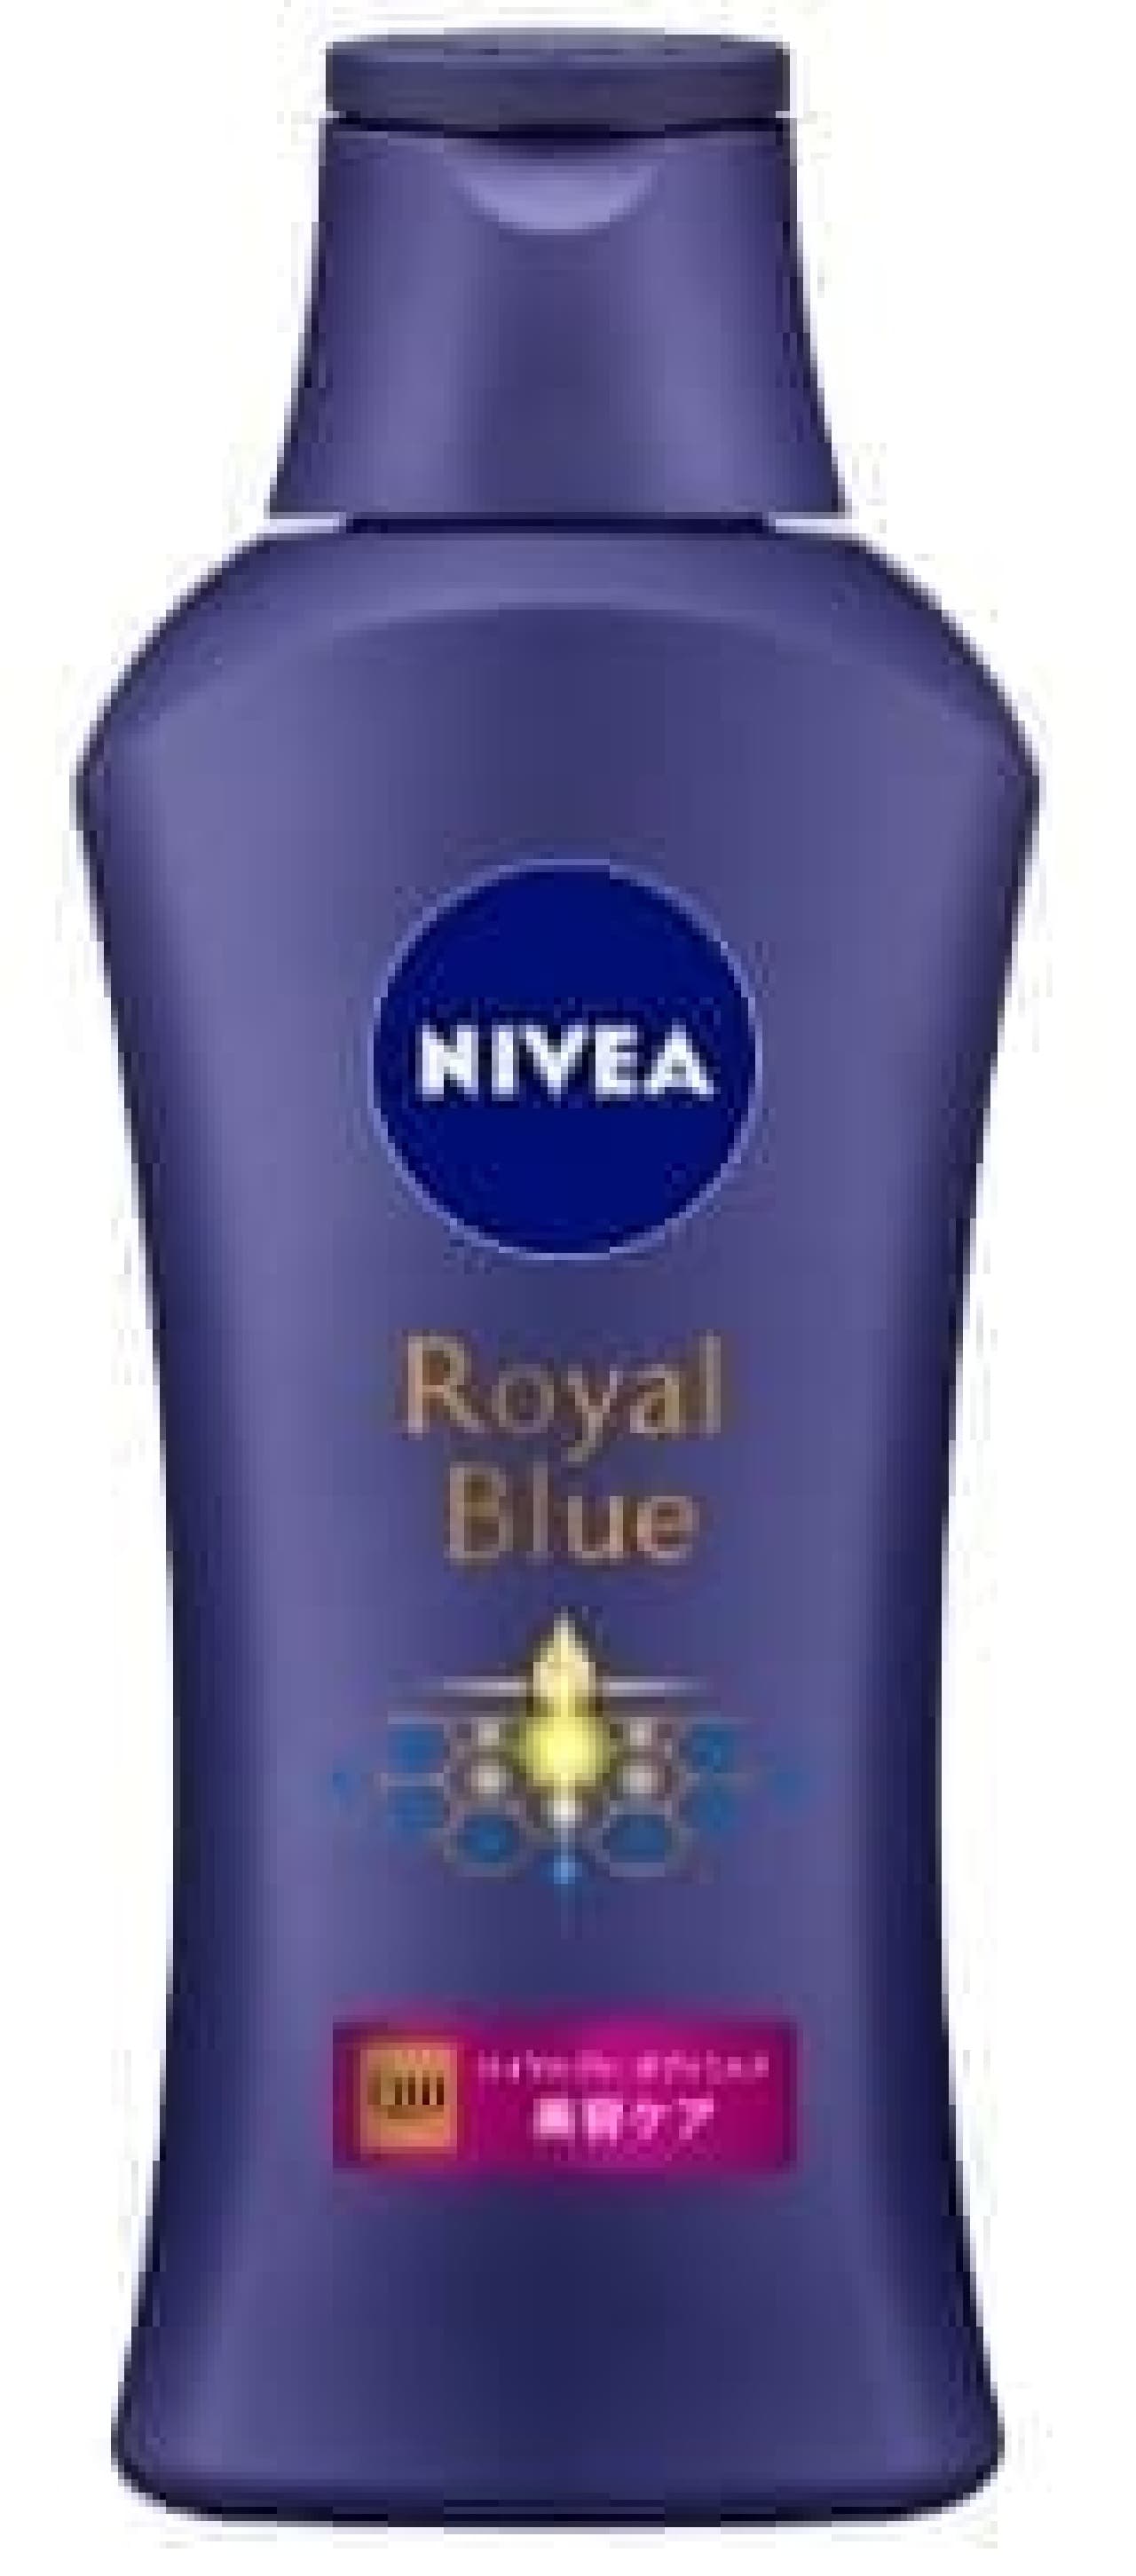 Nivea Royal Blue Body Milk Beauty Care